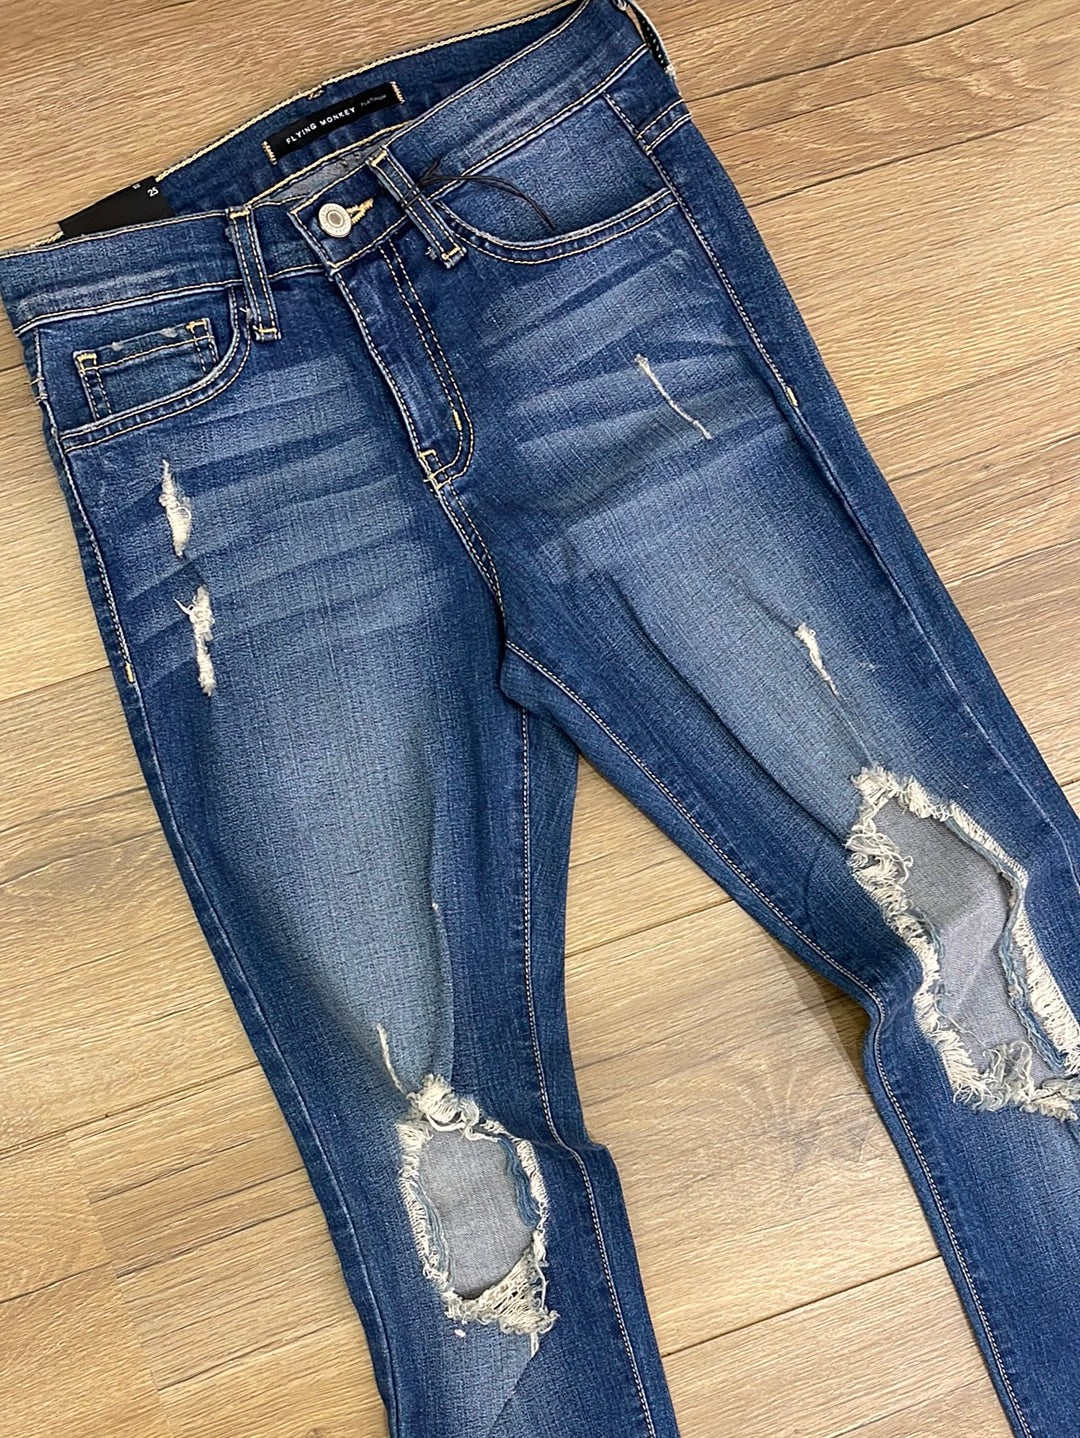 Flying Monkey Rise & Grind Distressed Dark Wash Skinny Jeans